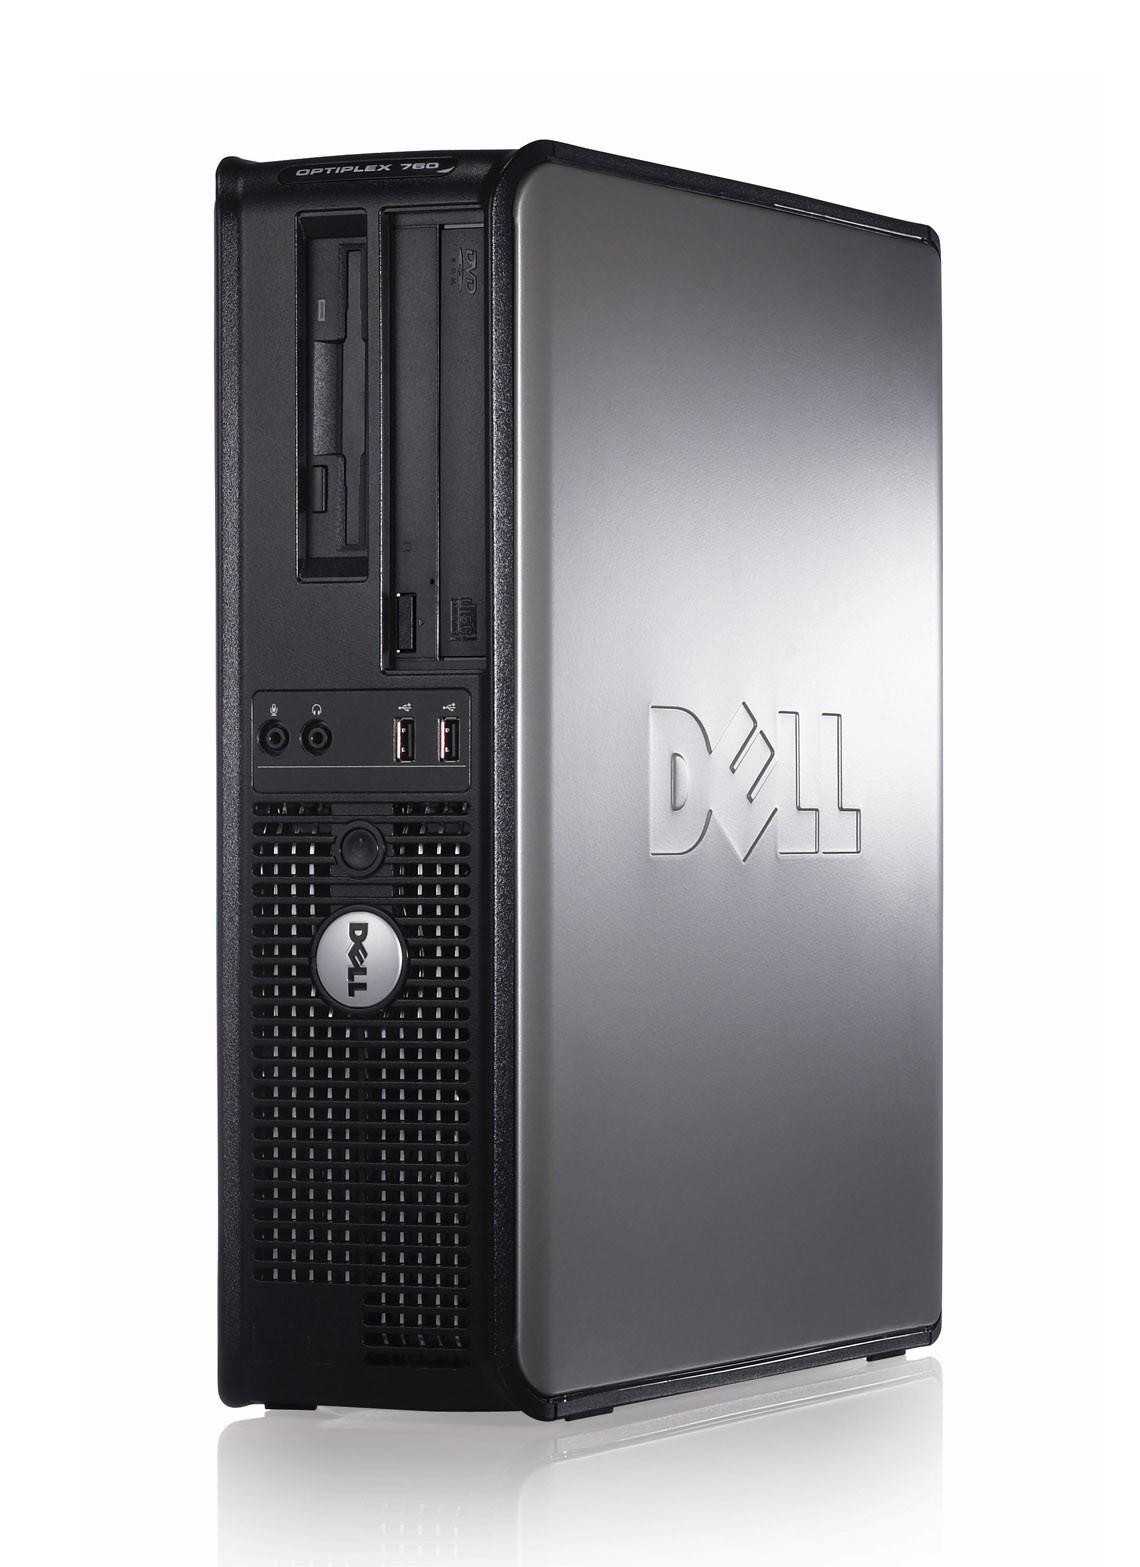 Dell optiplex 755 DT